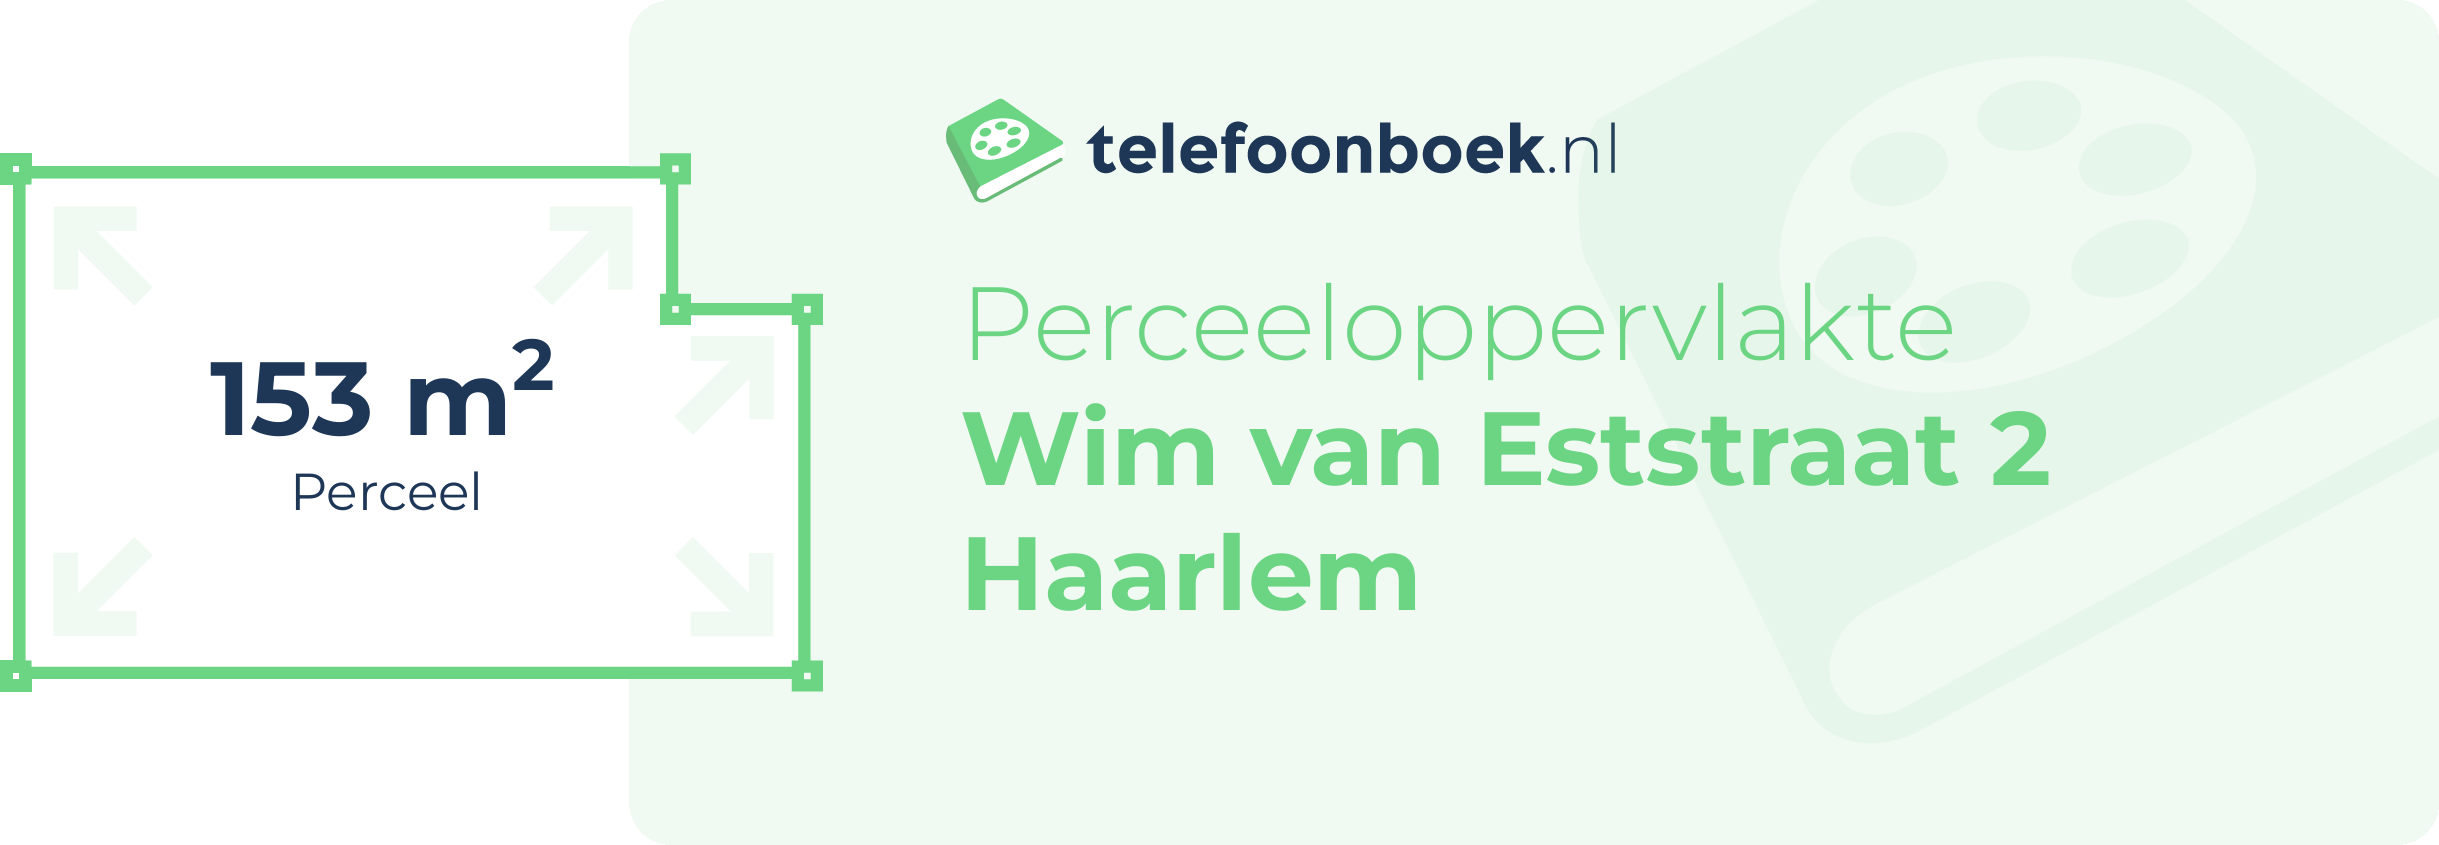 Perceeloppervlakte Wim Van Eststraat 2 Haarlem